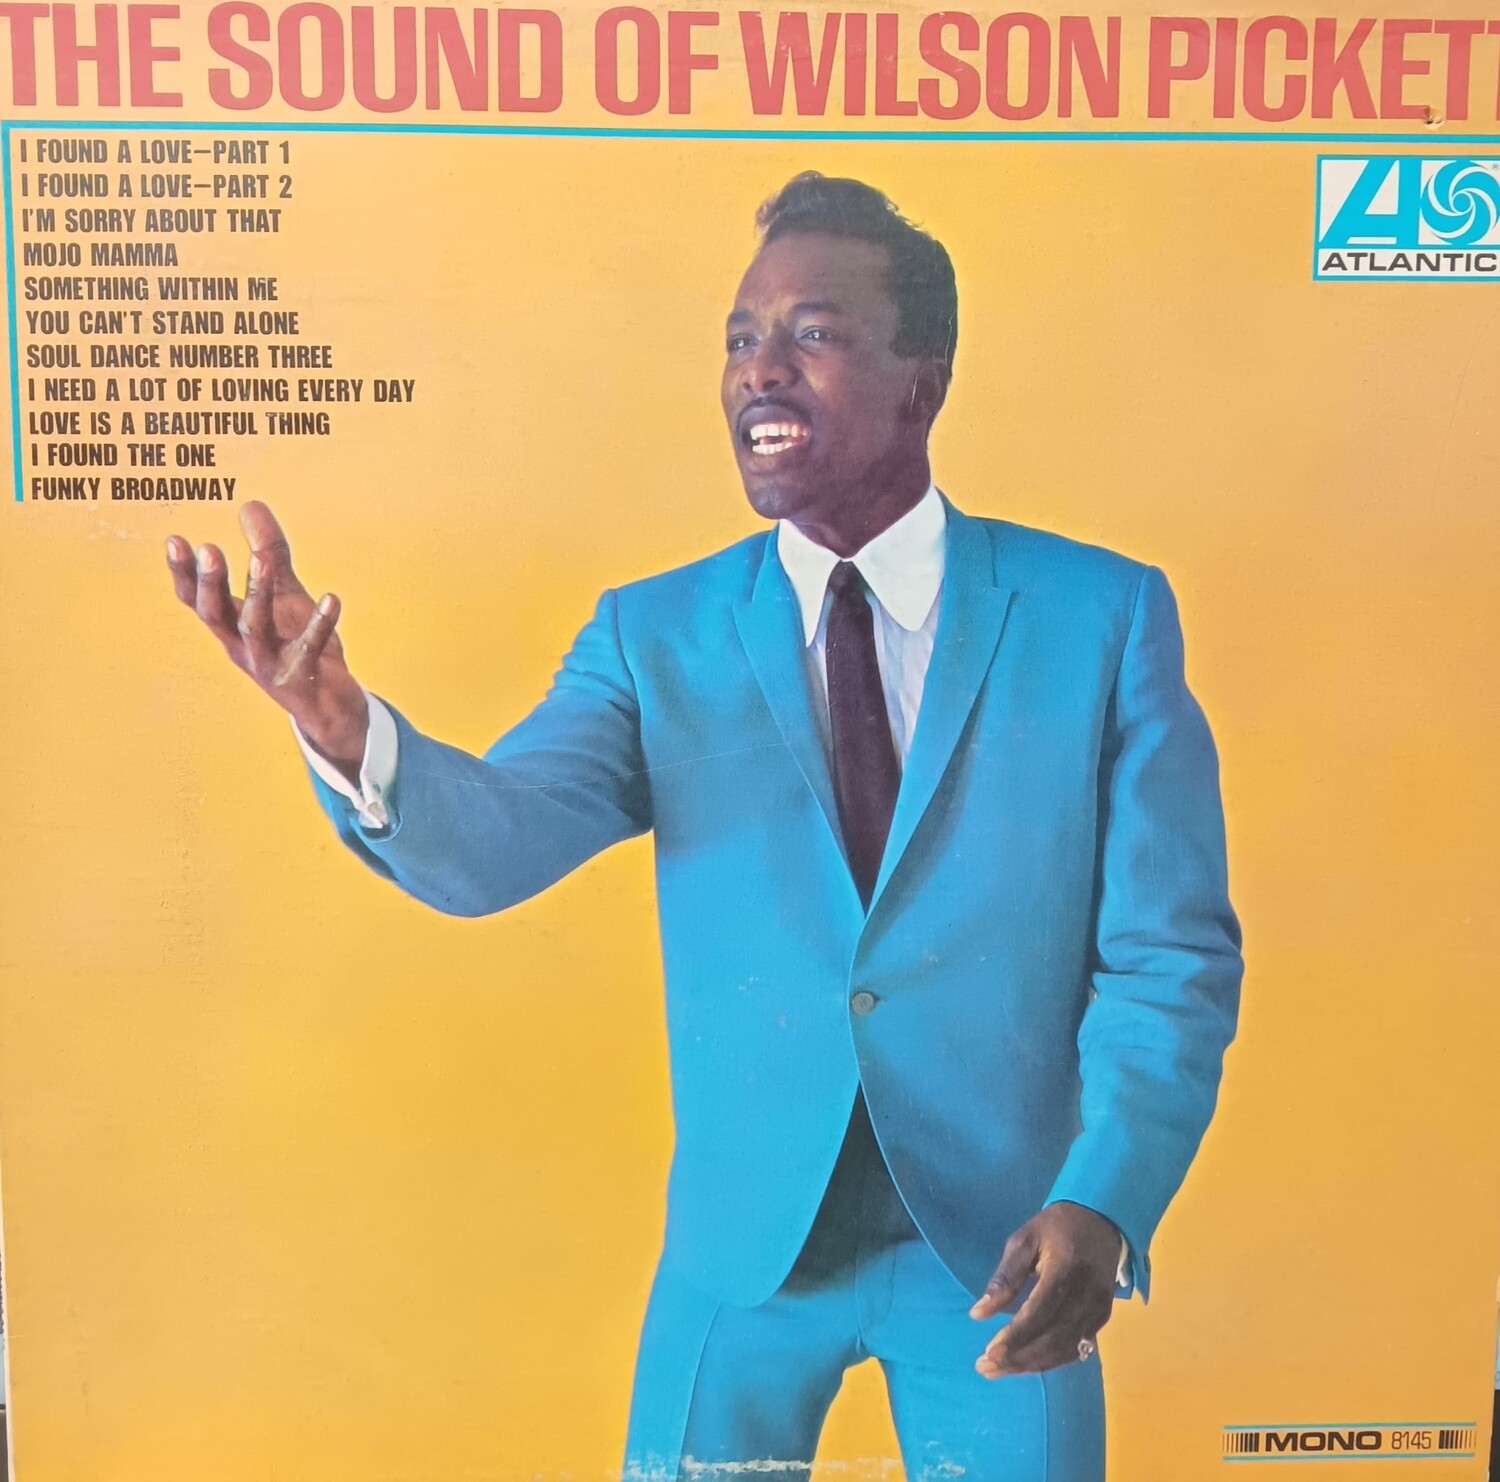 WILSON PICKETT - The sound of Wilson Pickett